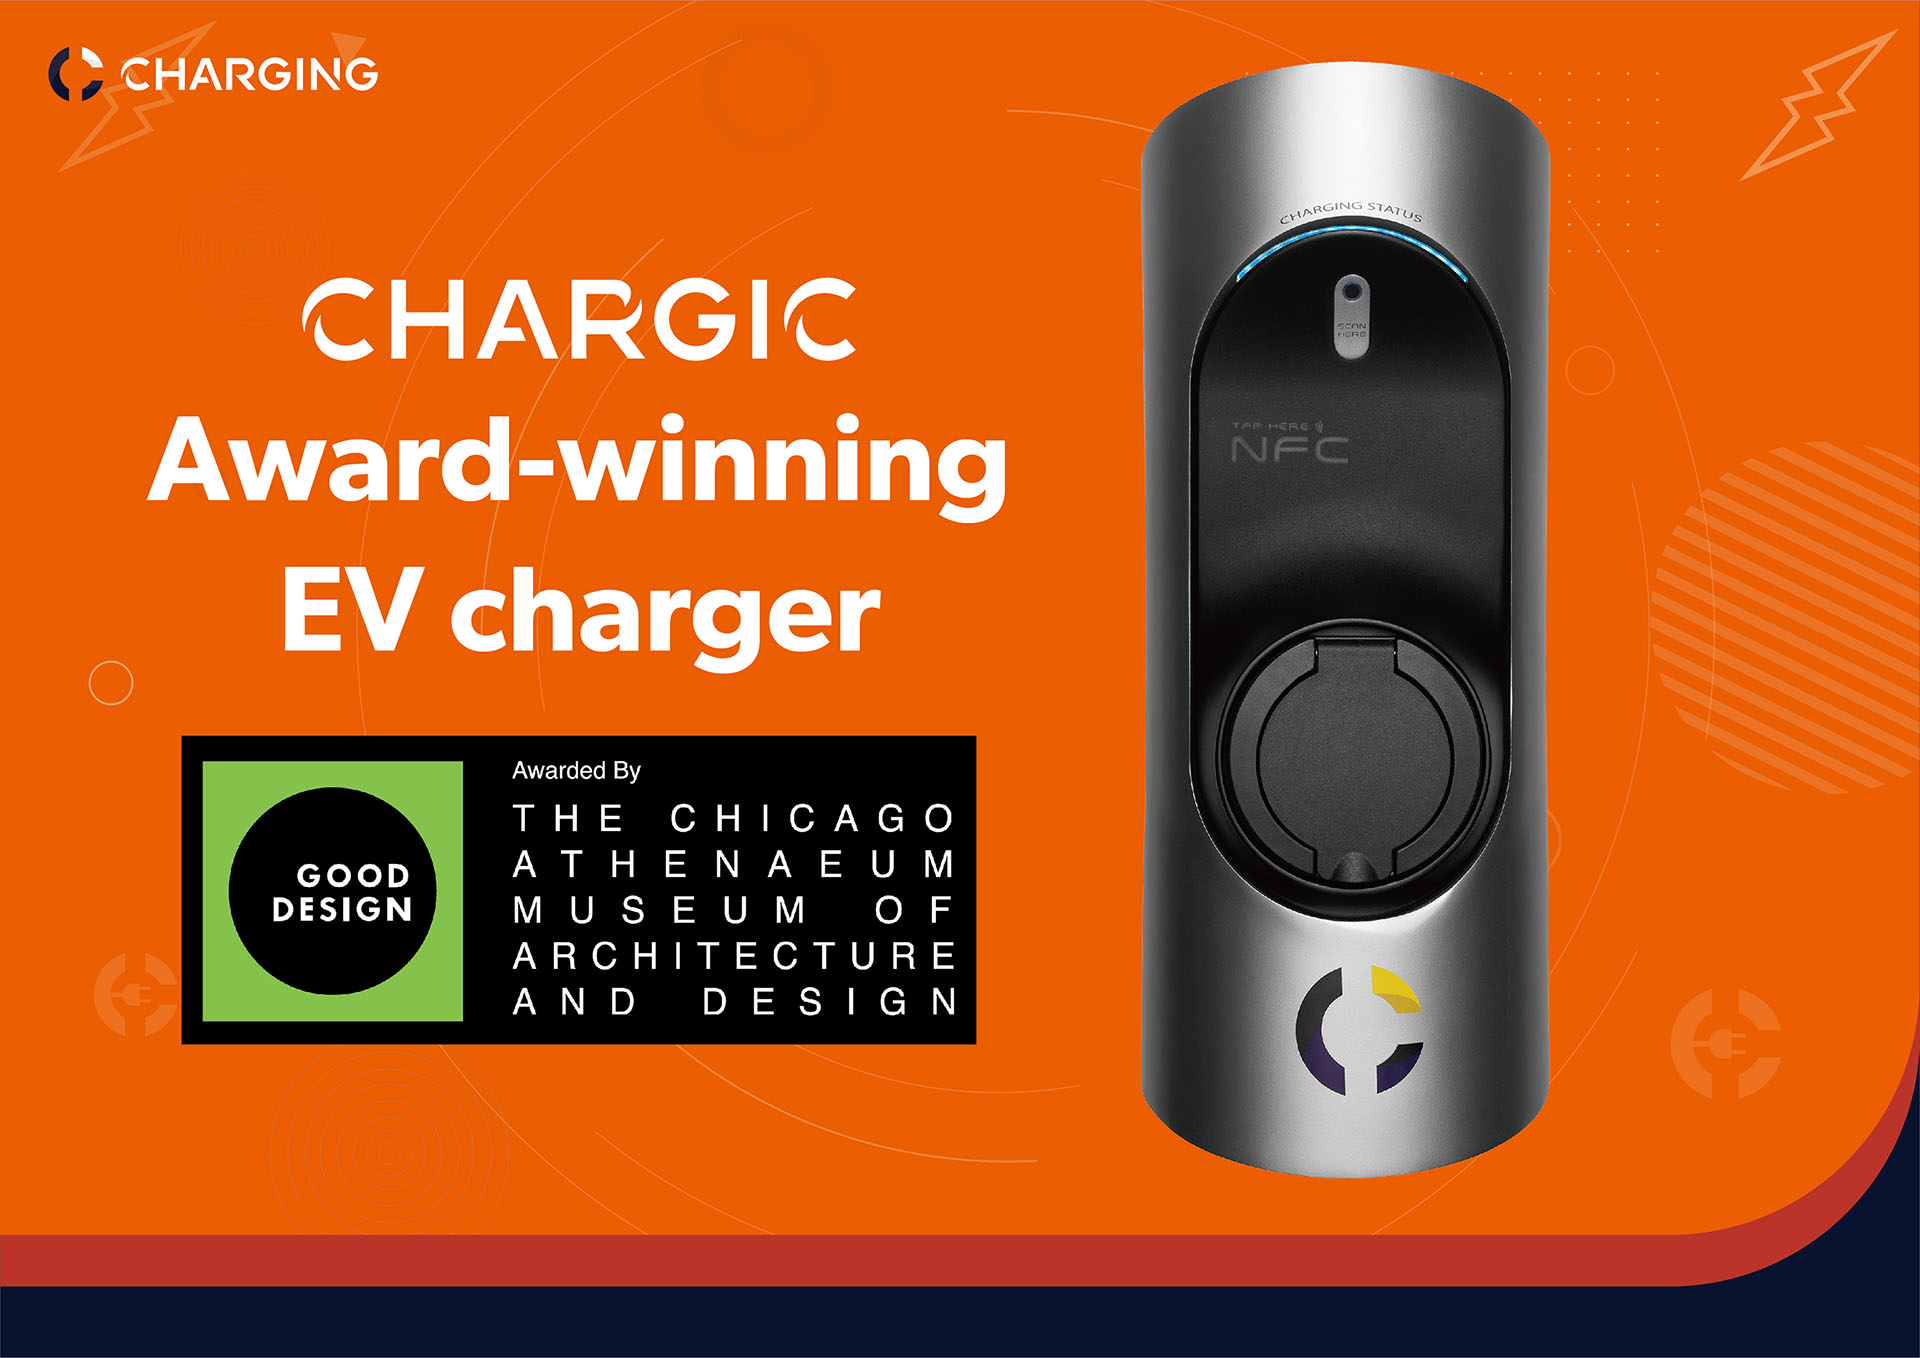 Cornerstone Technologies produced award-winning chargers